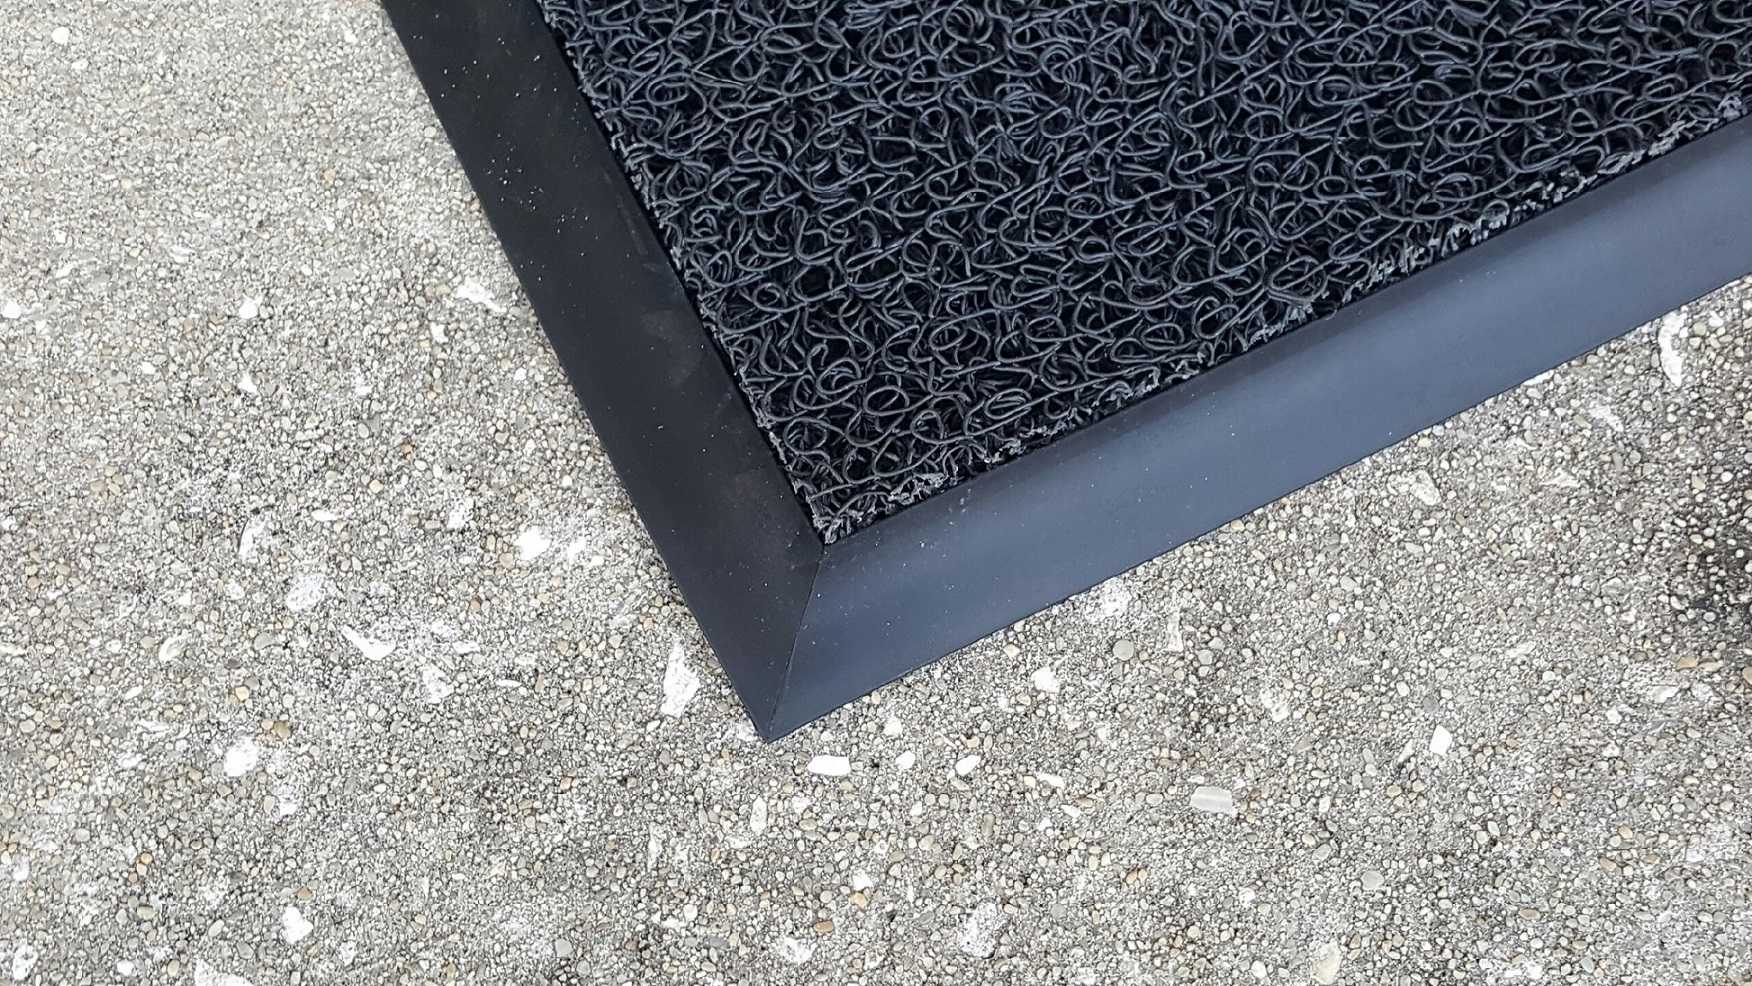 MARBLELIFE® Exterior Anti-Wear Floor Mat: 4' x 6